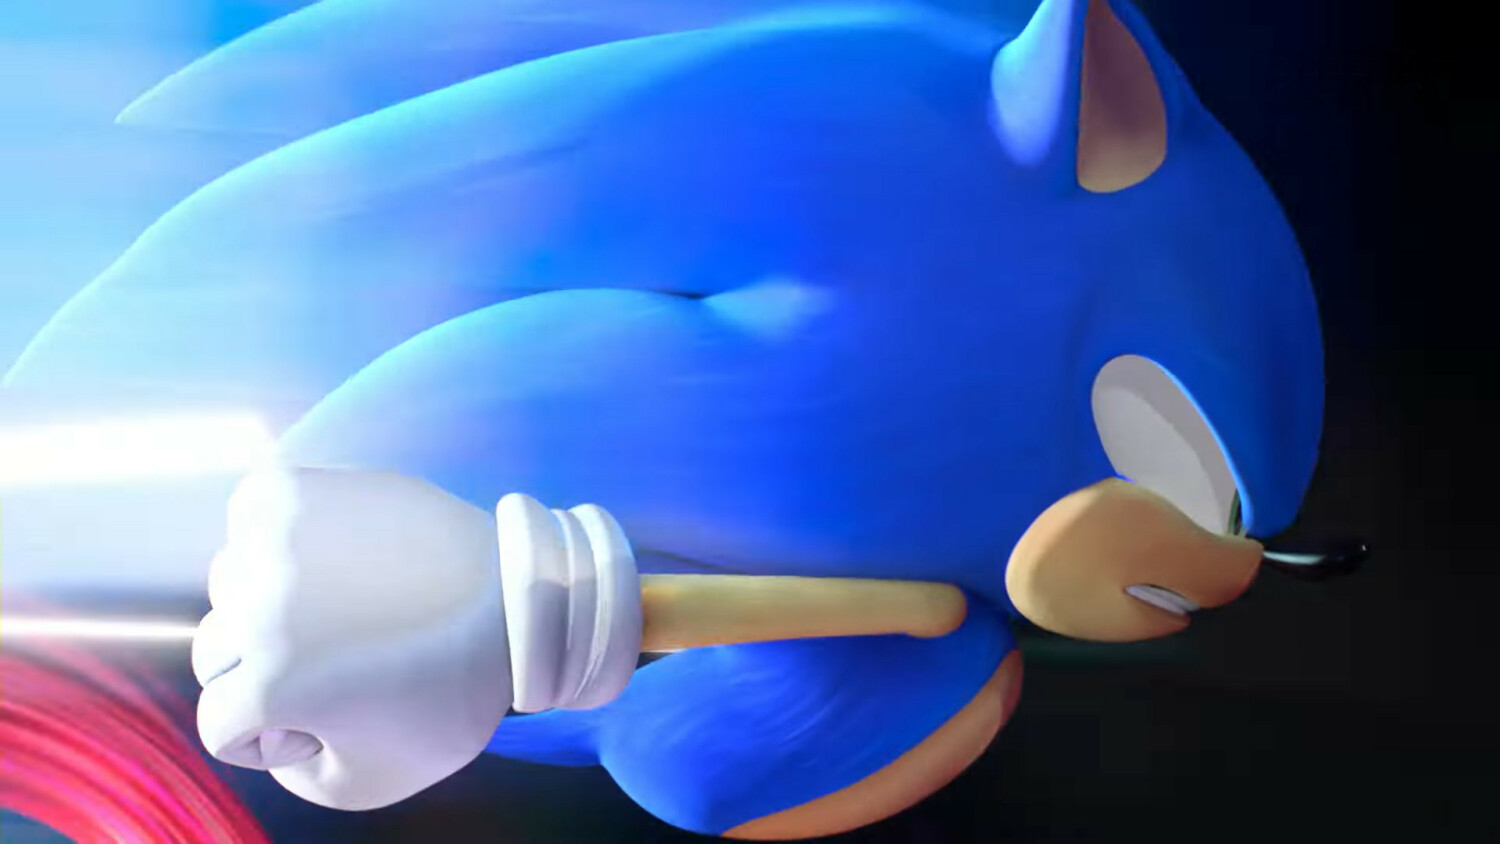 New Sonic Prime footage: legit?